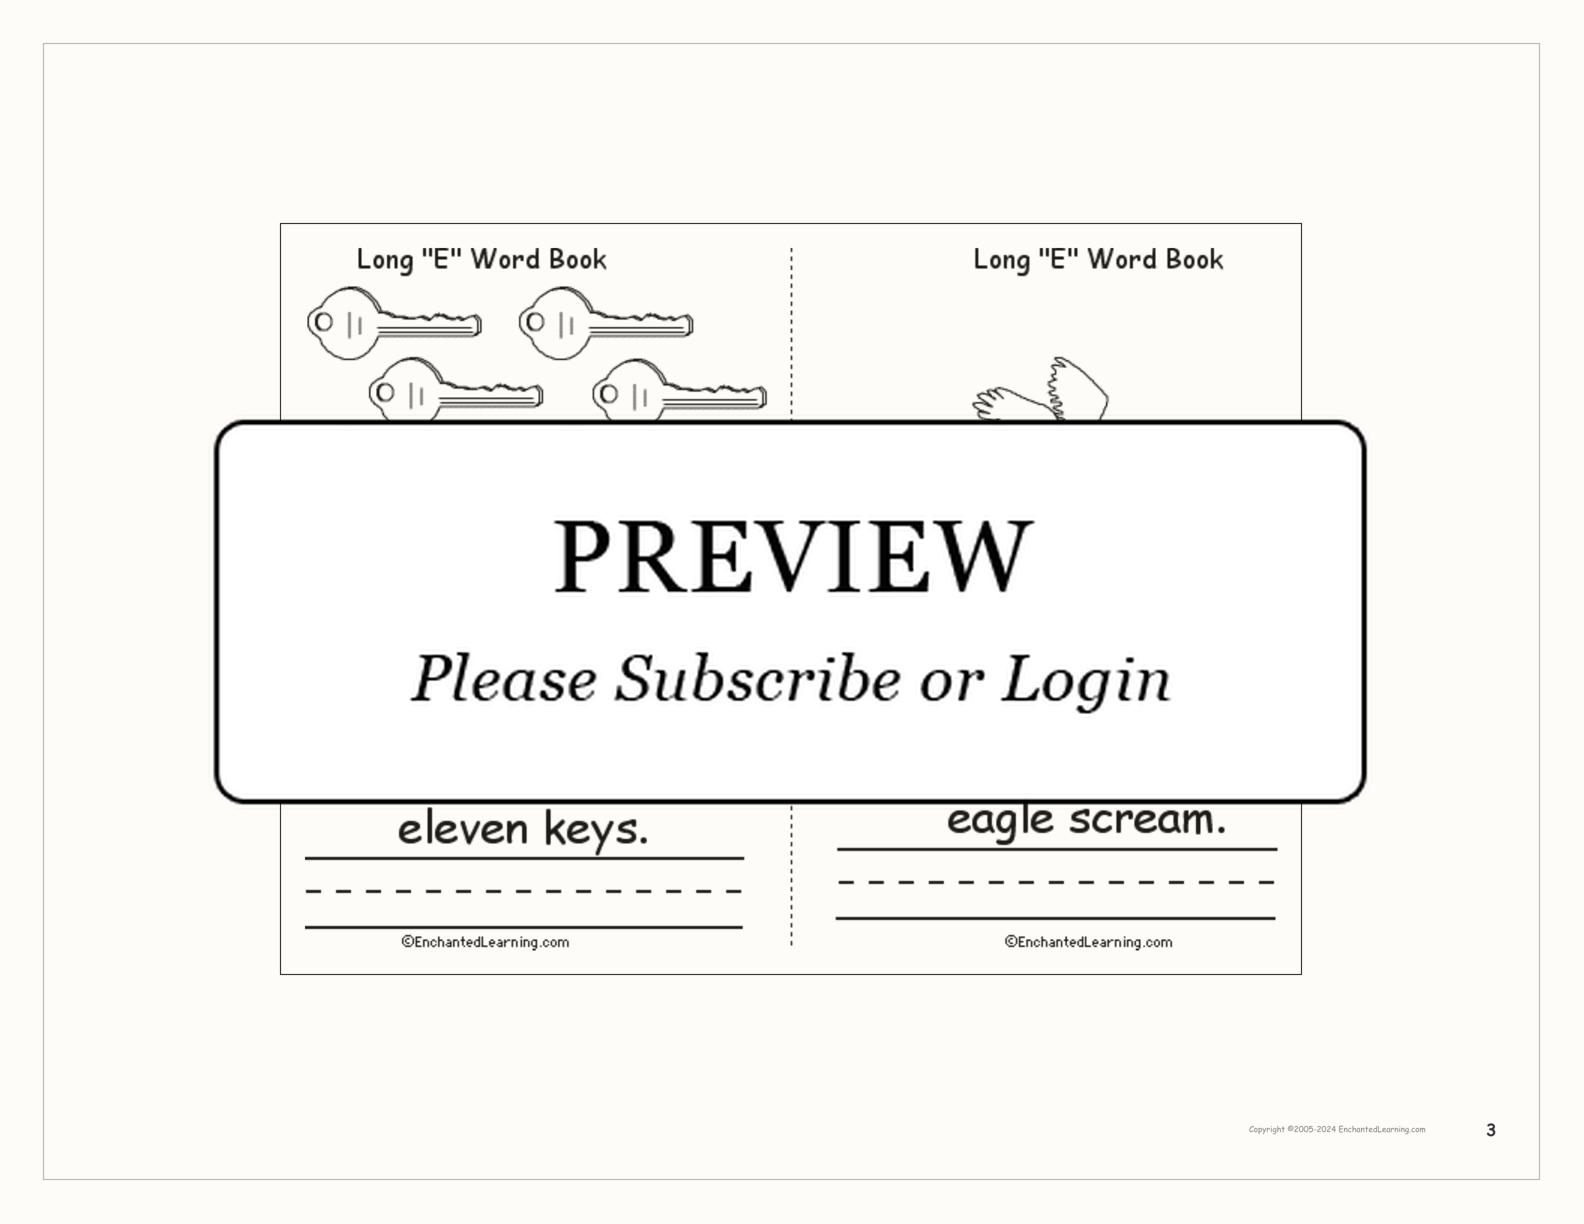 Long 'E' Words Book interactive printout page 3